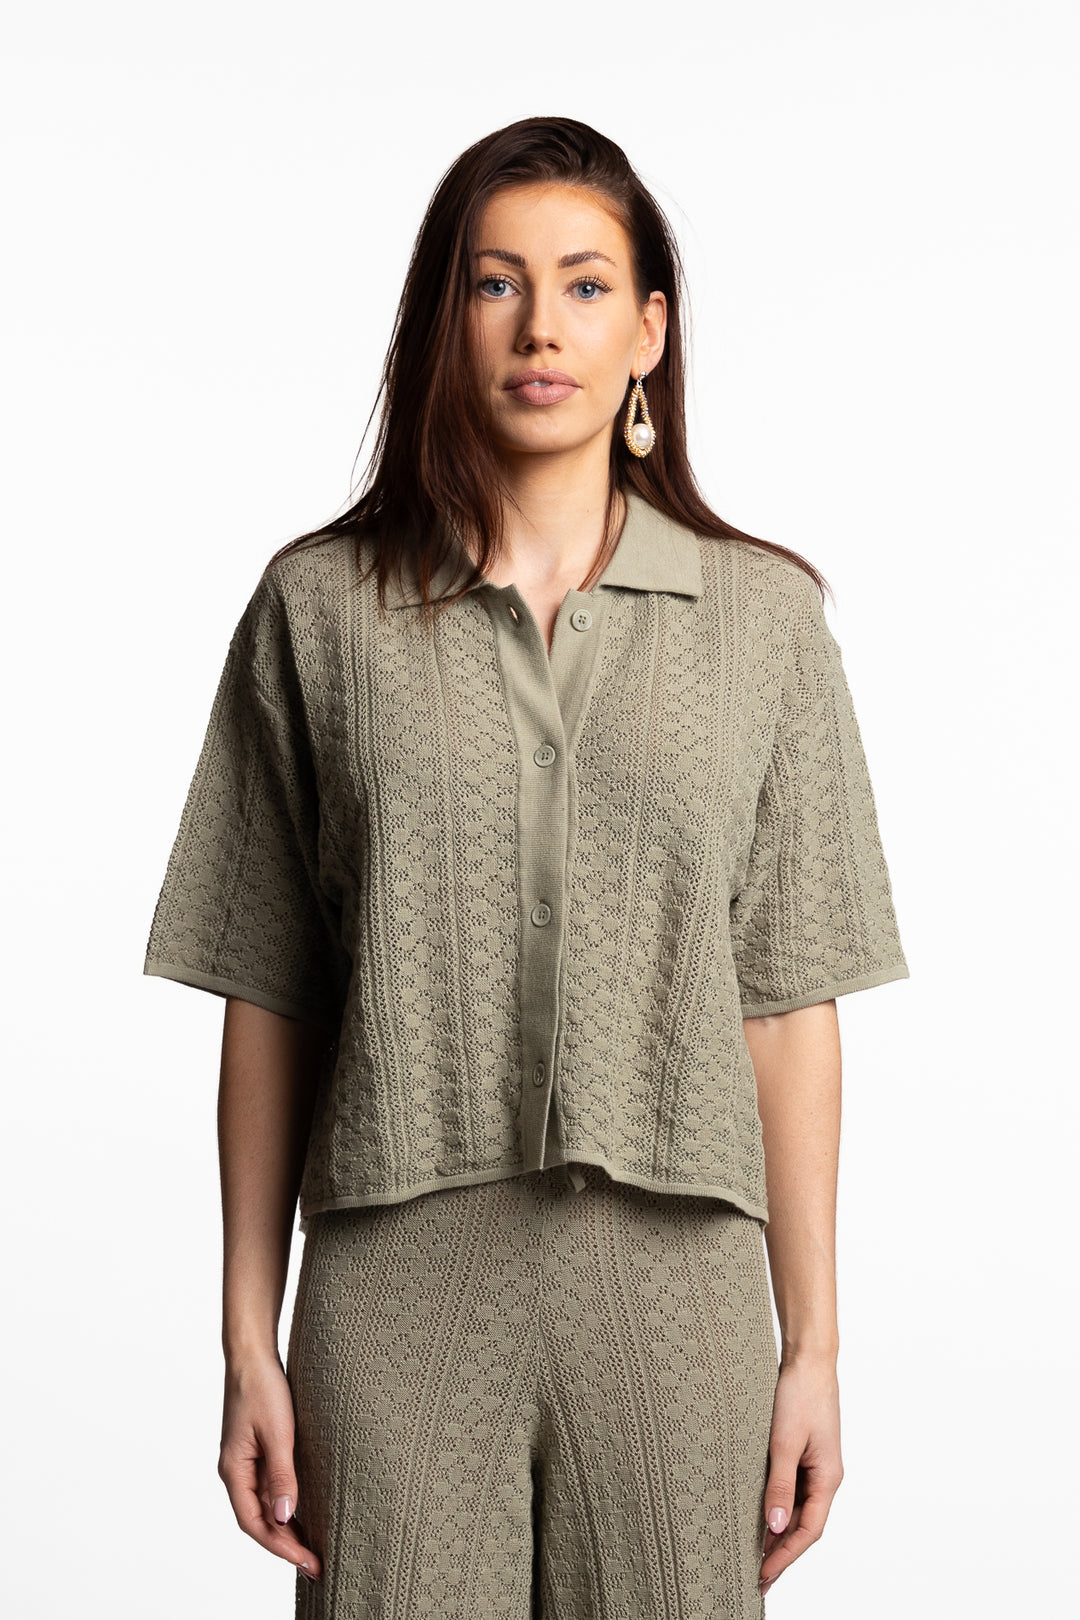 Loch Crochet Knit Shirt- Teal